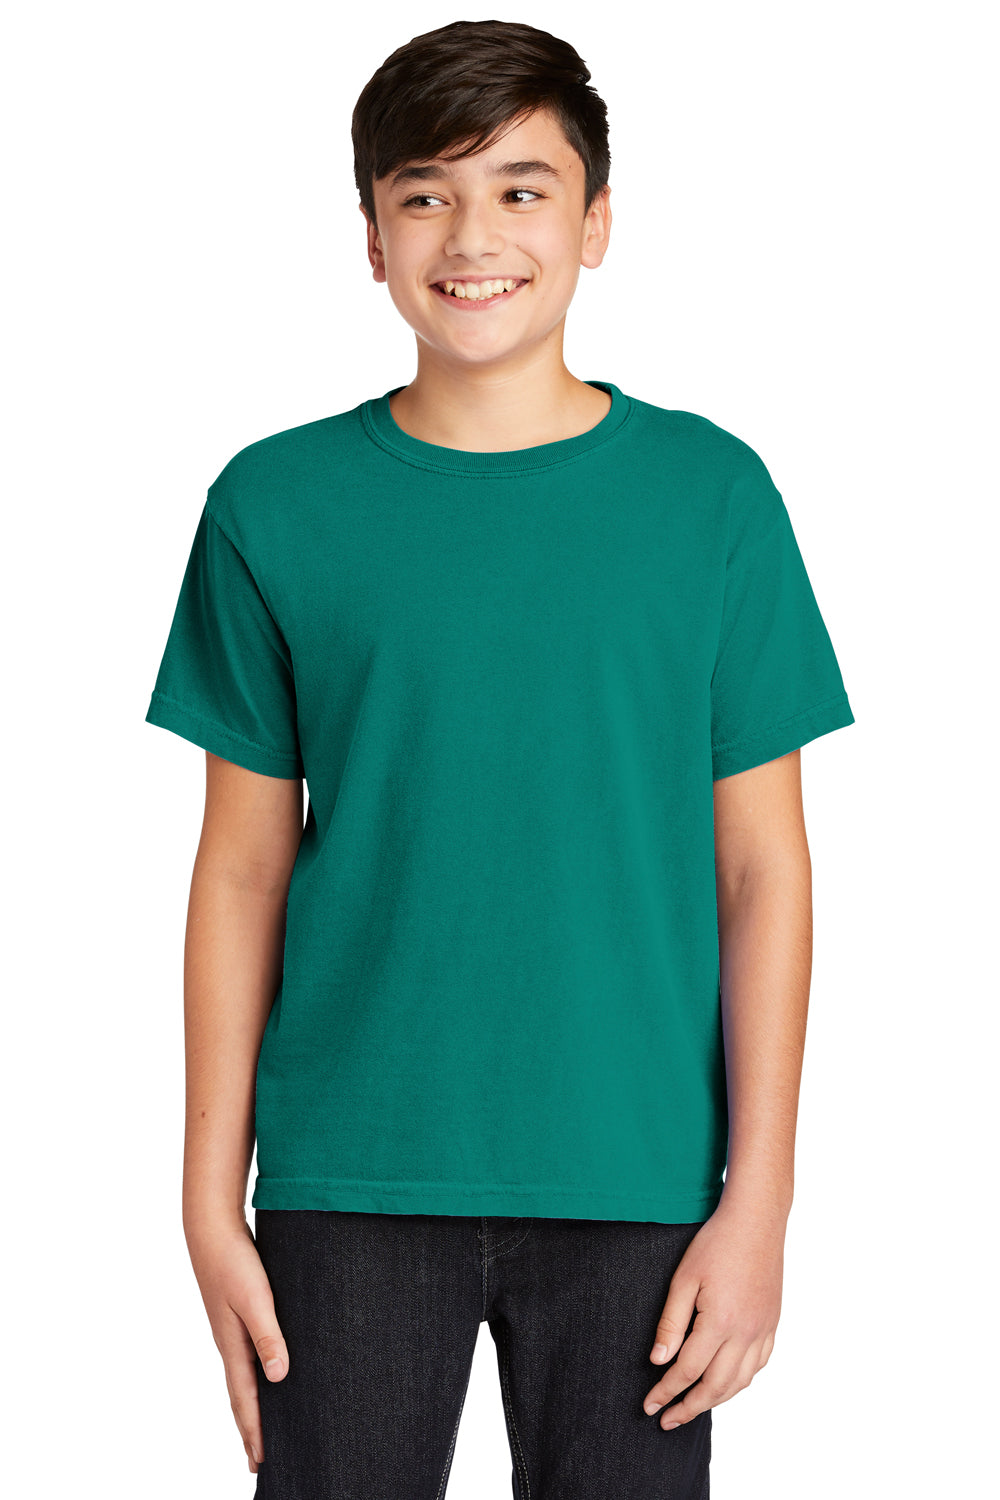 Comfort Colors C9018 Youth Short Sleeve Crewneck T-Shirt Seafoam Green Front